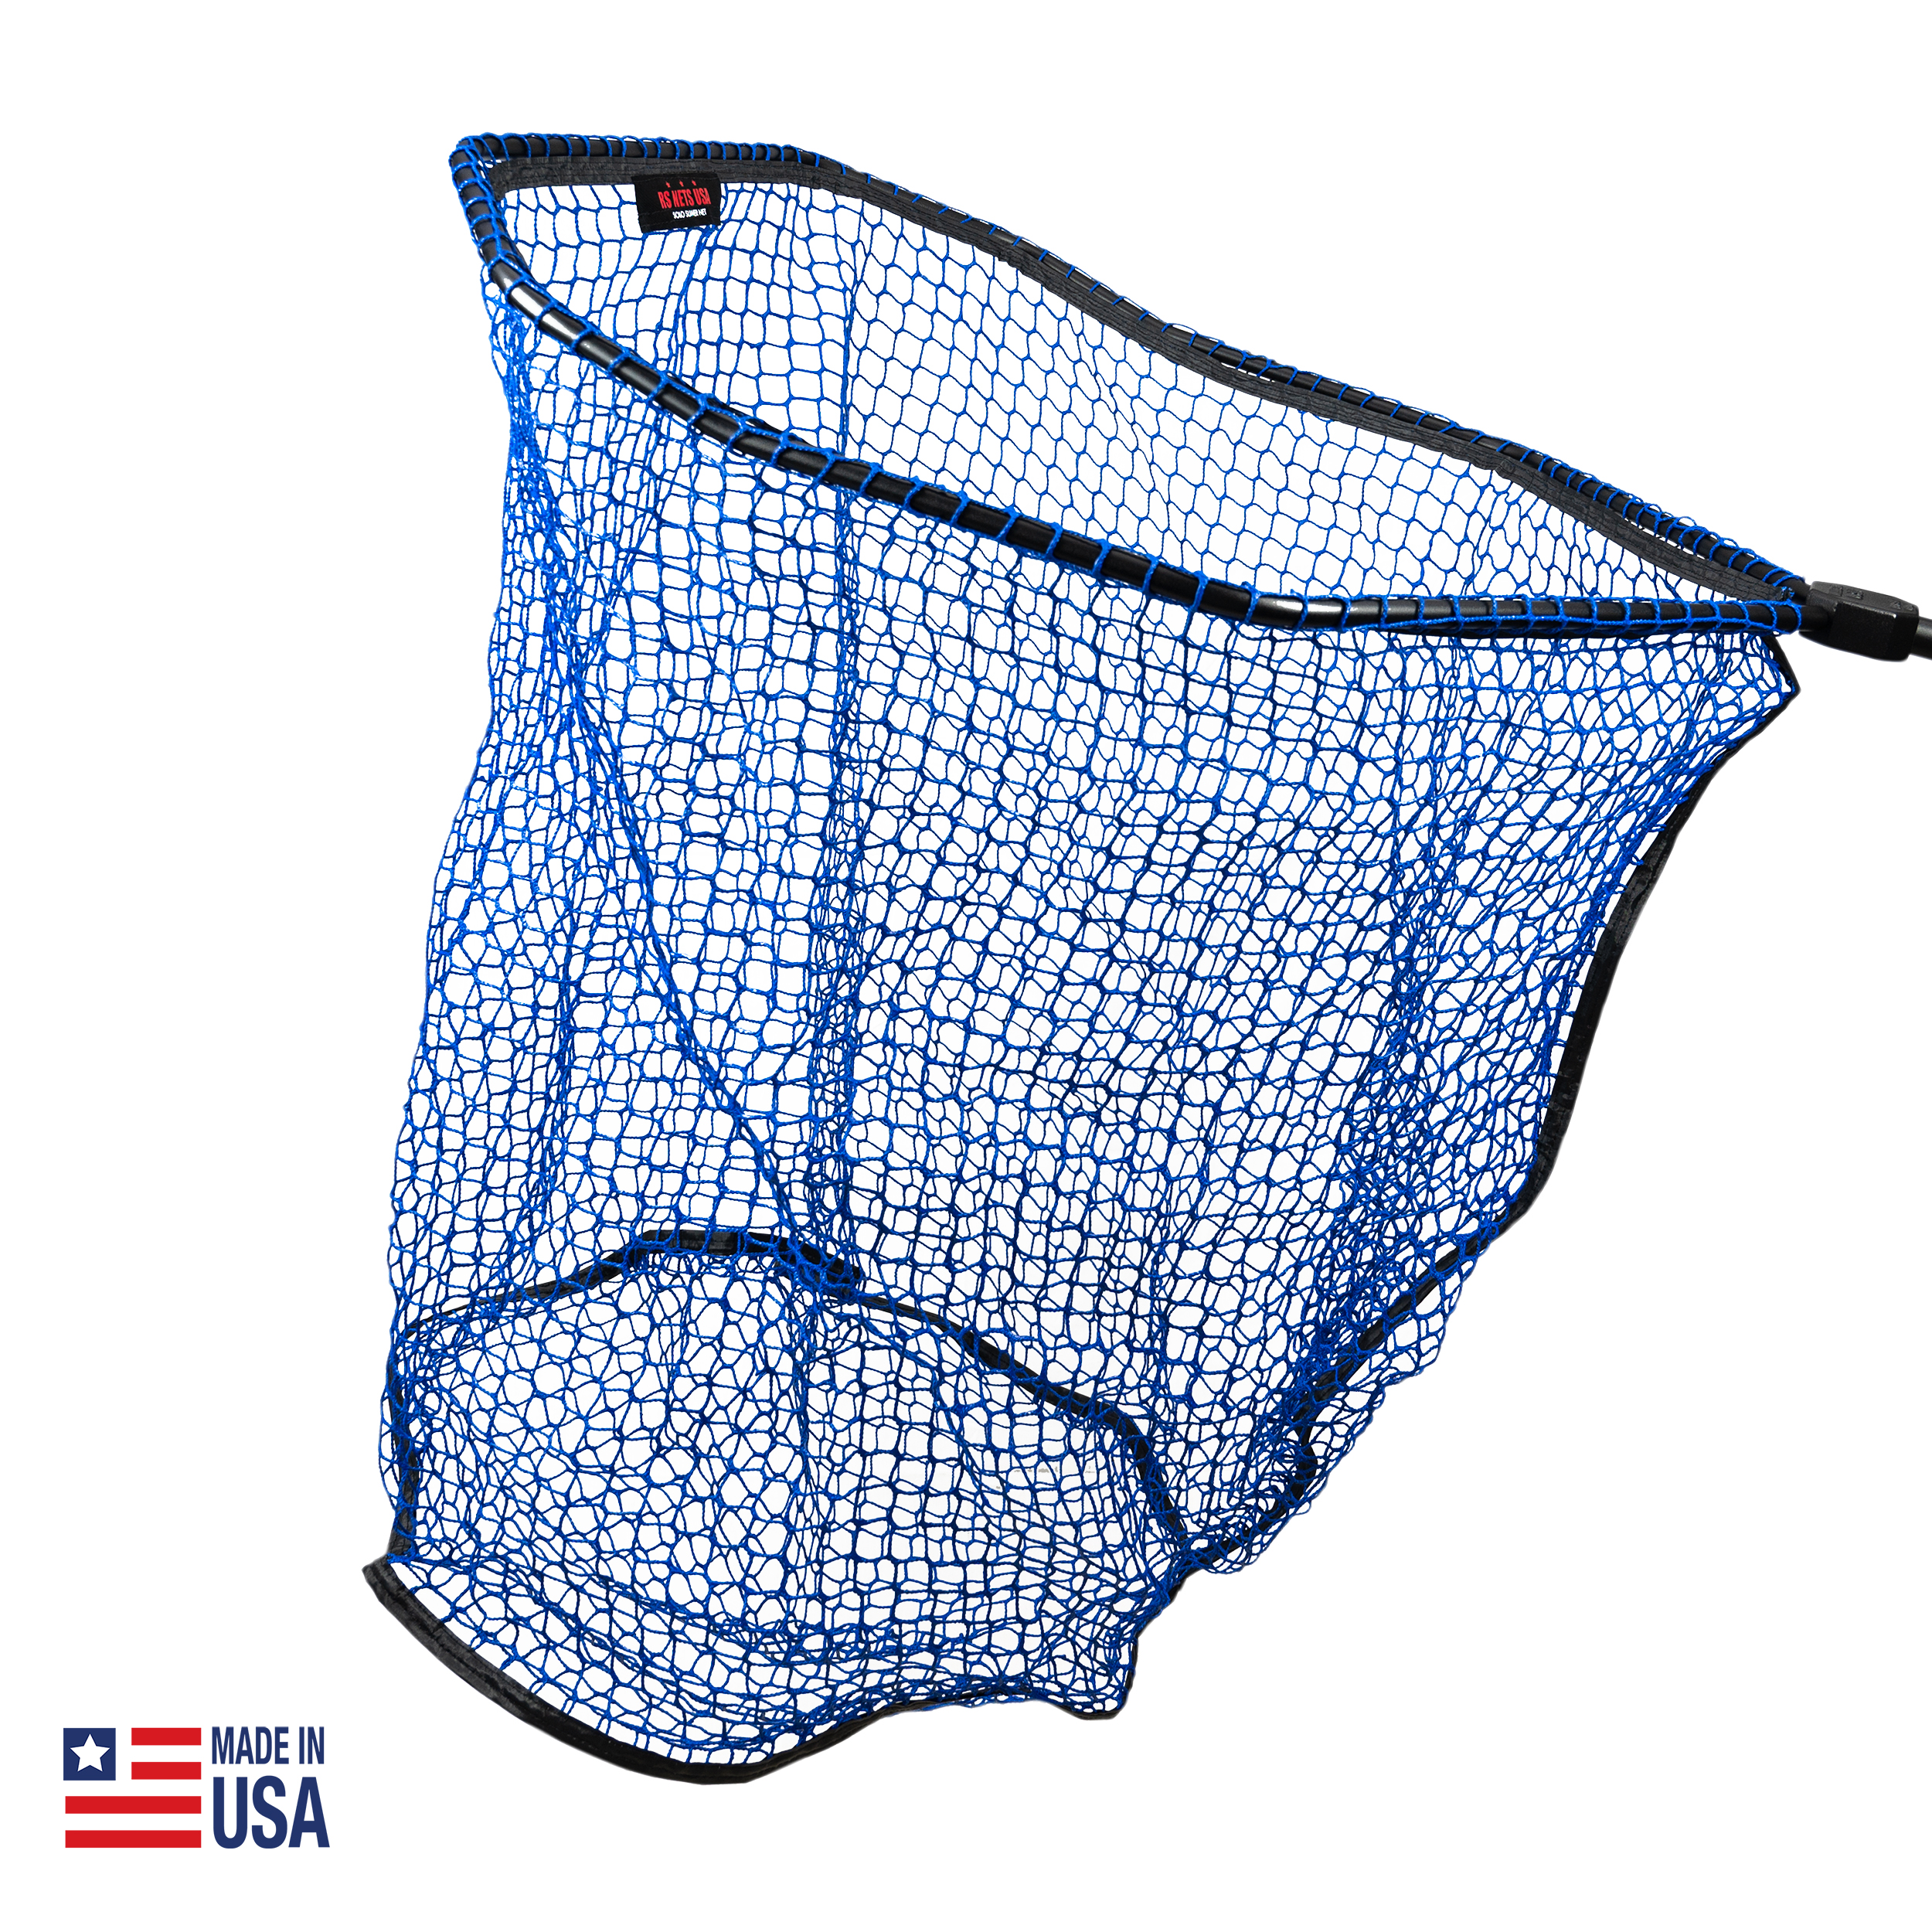 Kingfisher Carp Rubber Landing Net - Small, Shop Today. Get it Tomorrow!